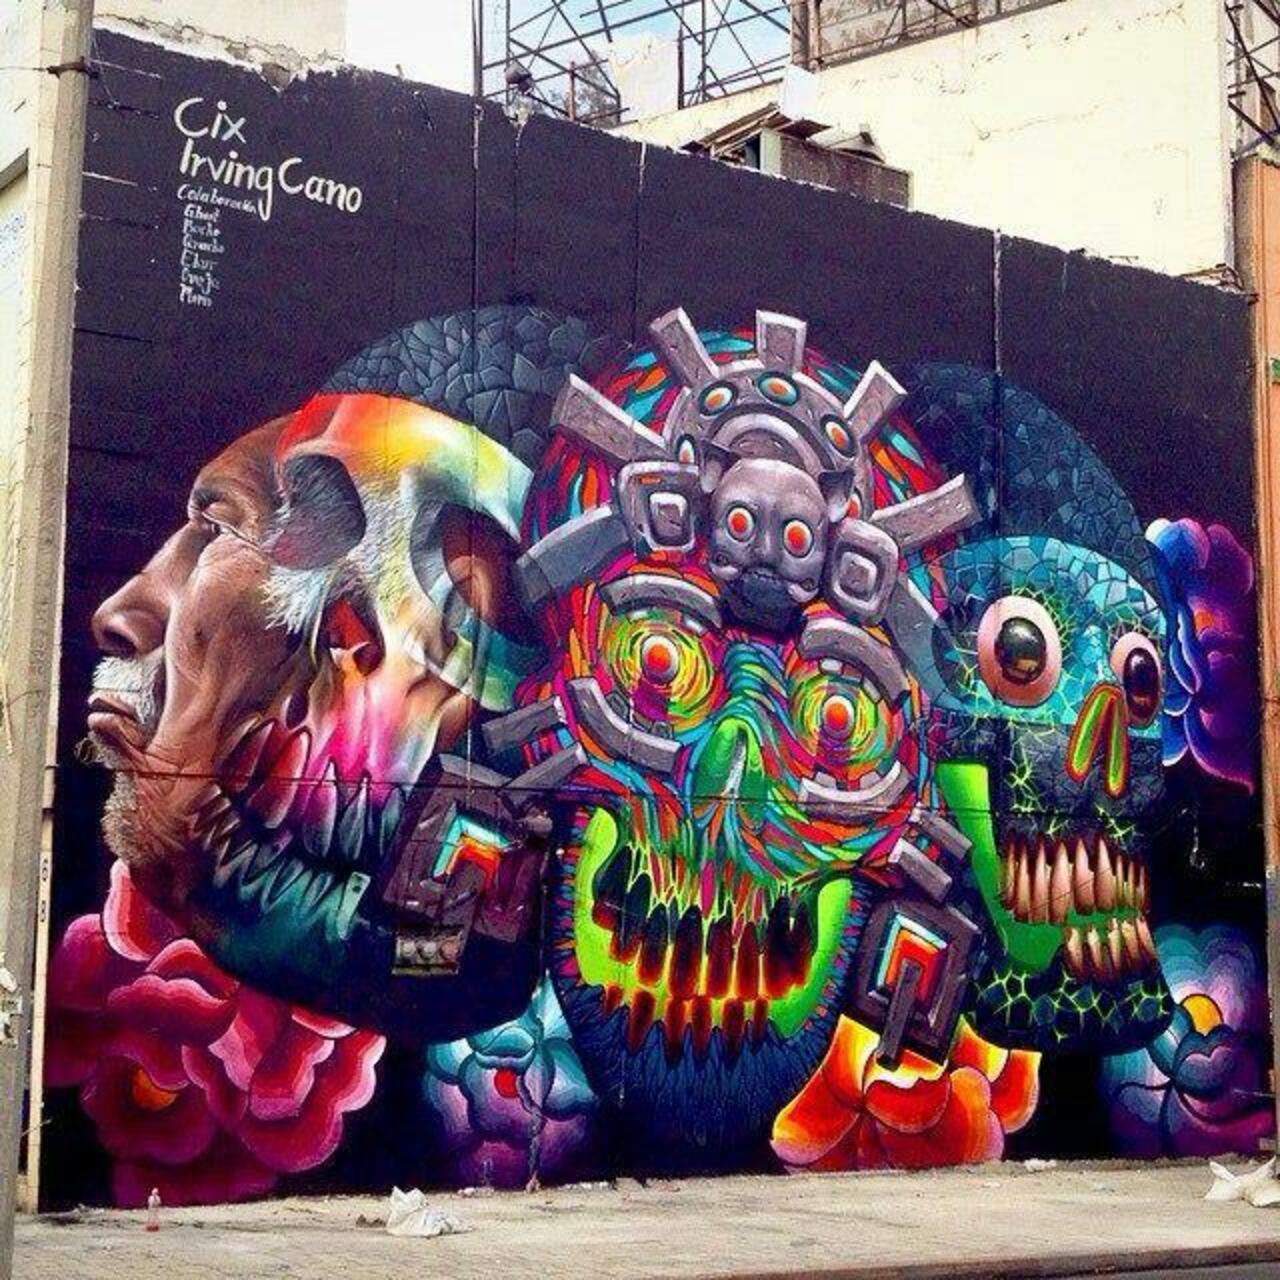 RT @QueGraffiti: Artistas: Irving Cano & Cix 
México 

#art #arte #graffiti #streetart http://t.co/chqDtHLwtB